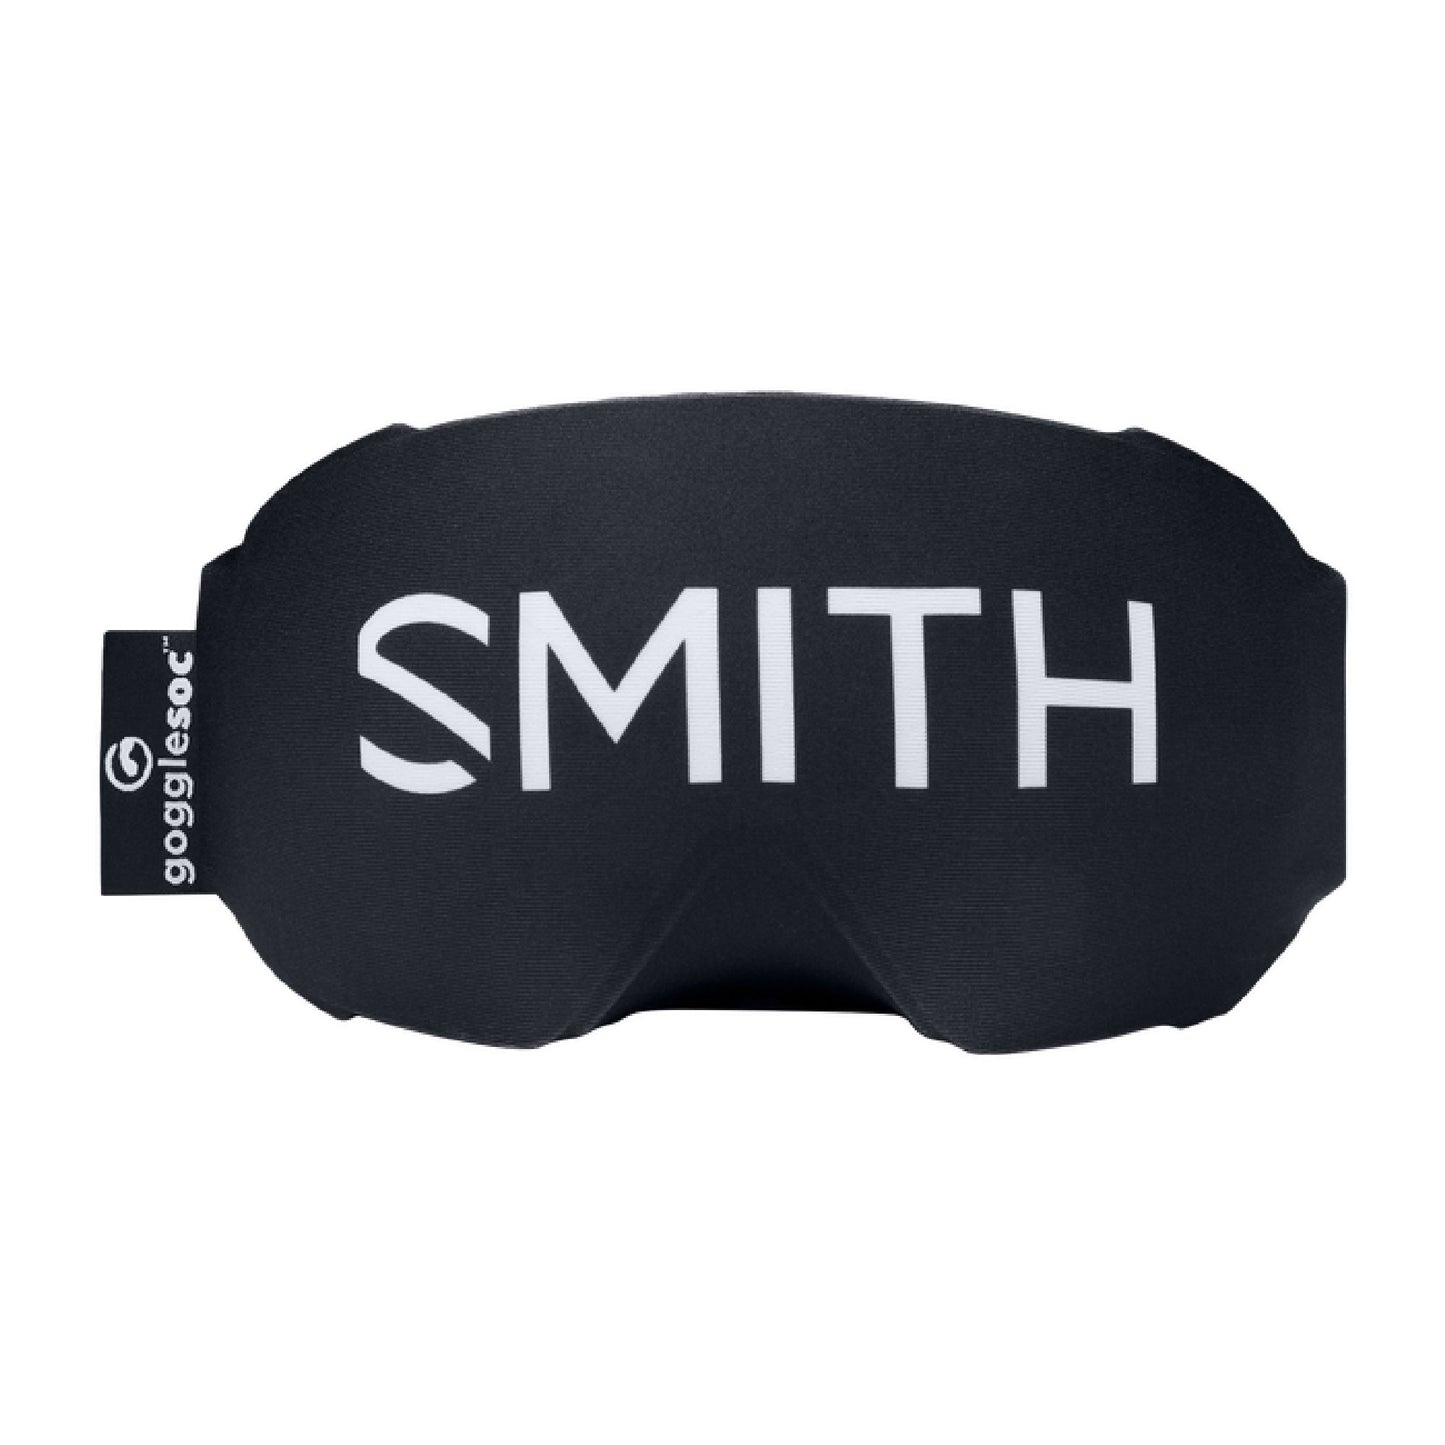 Smith 4D MAG Snow Goggle White Vapor / ChromaPop Sun Platinum Mirror Snow Goggles